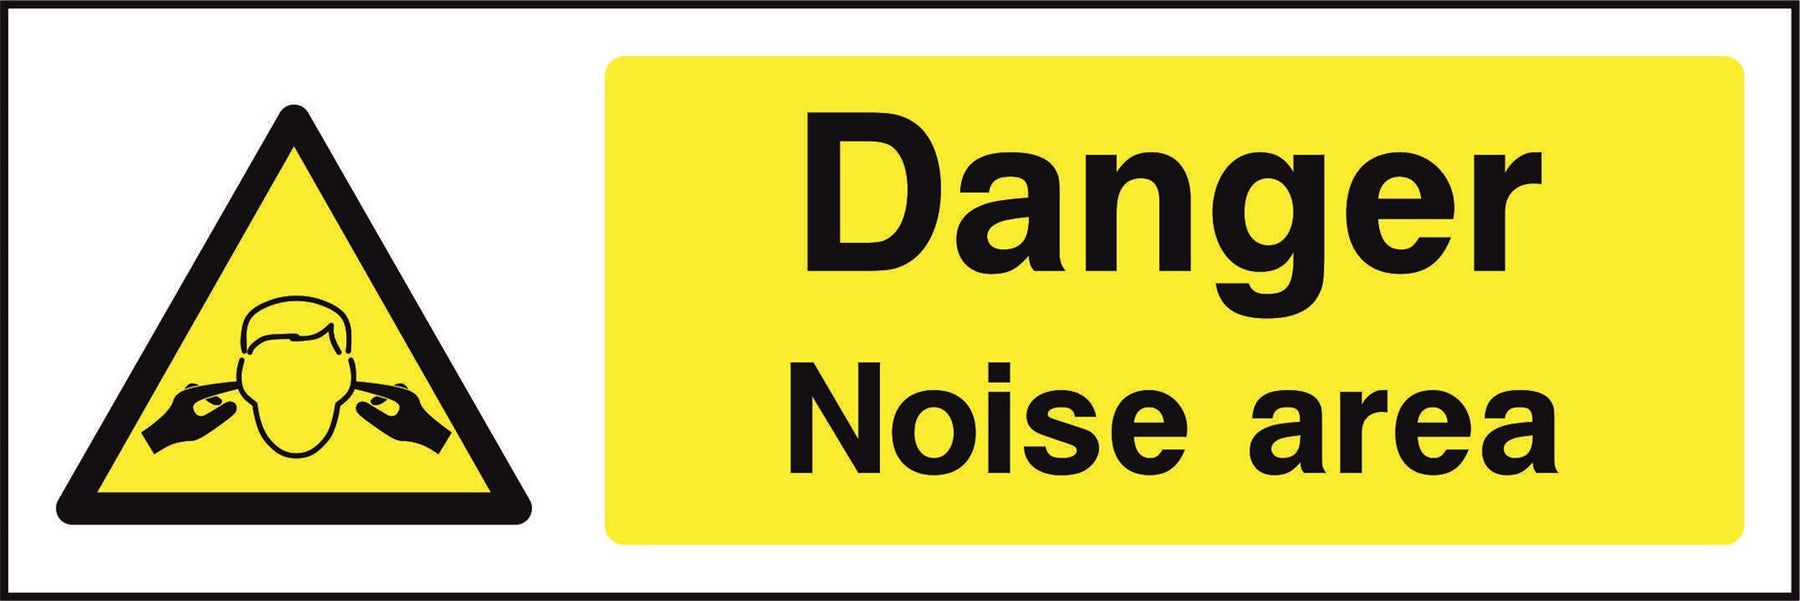 Danger Noise area